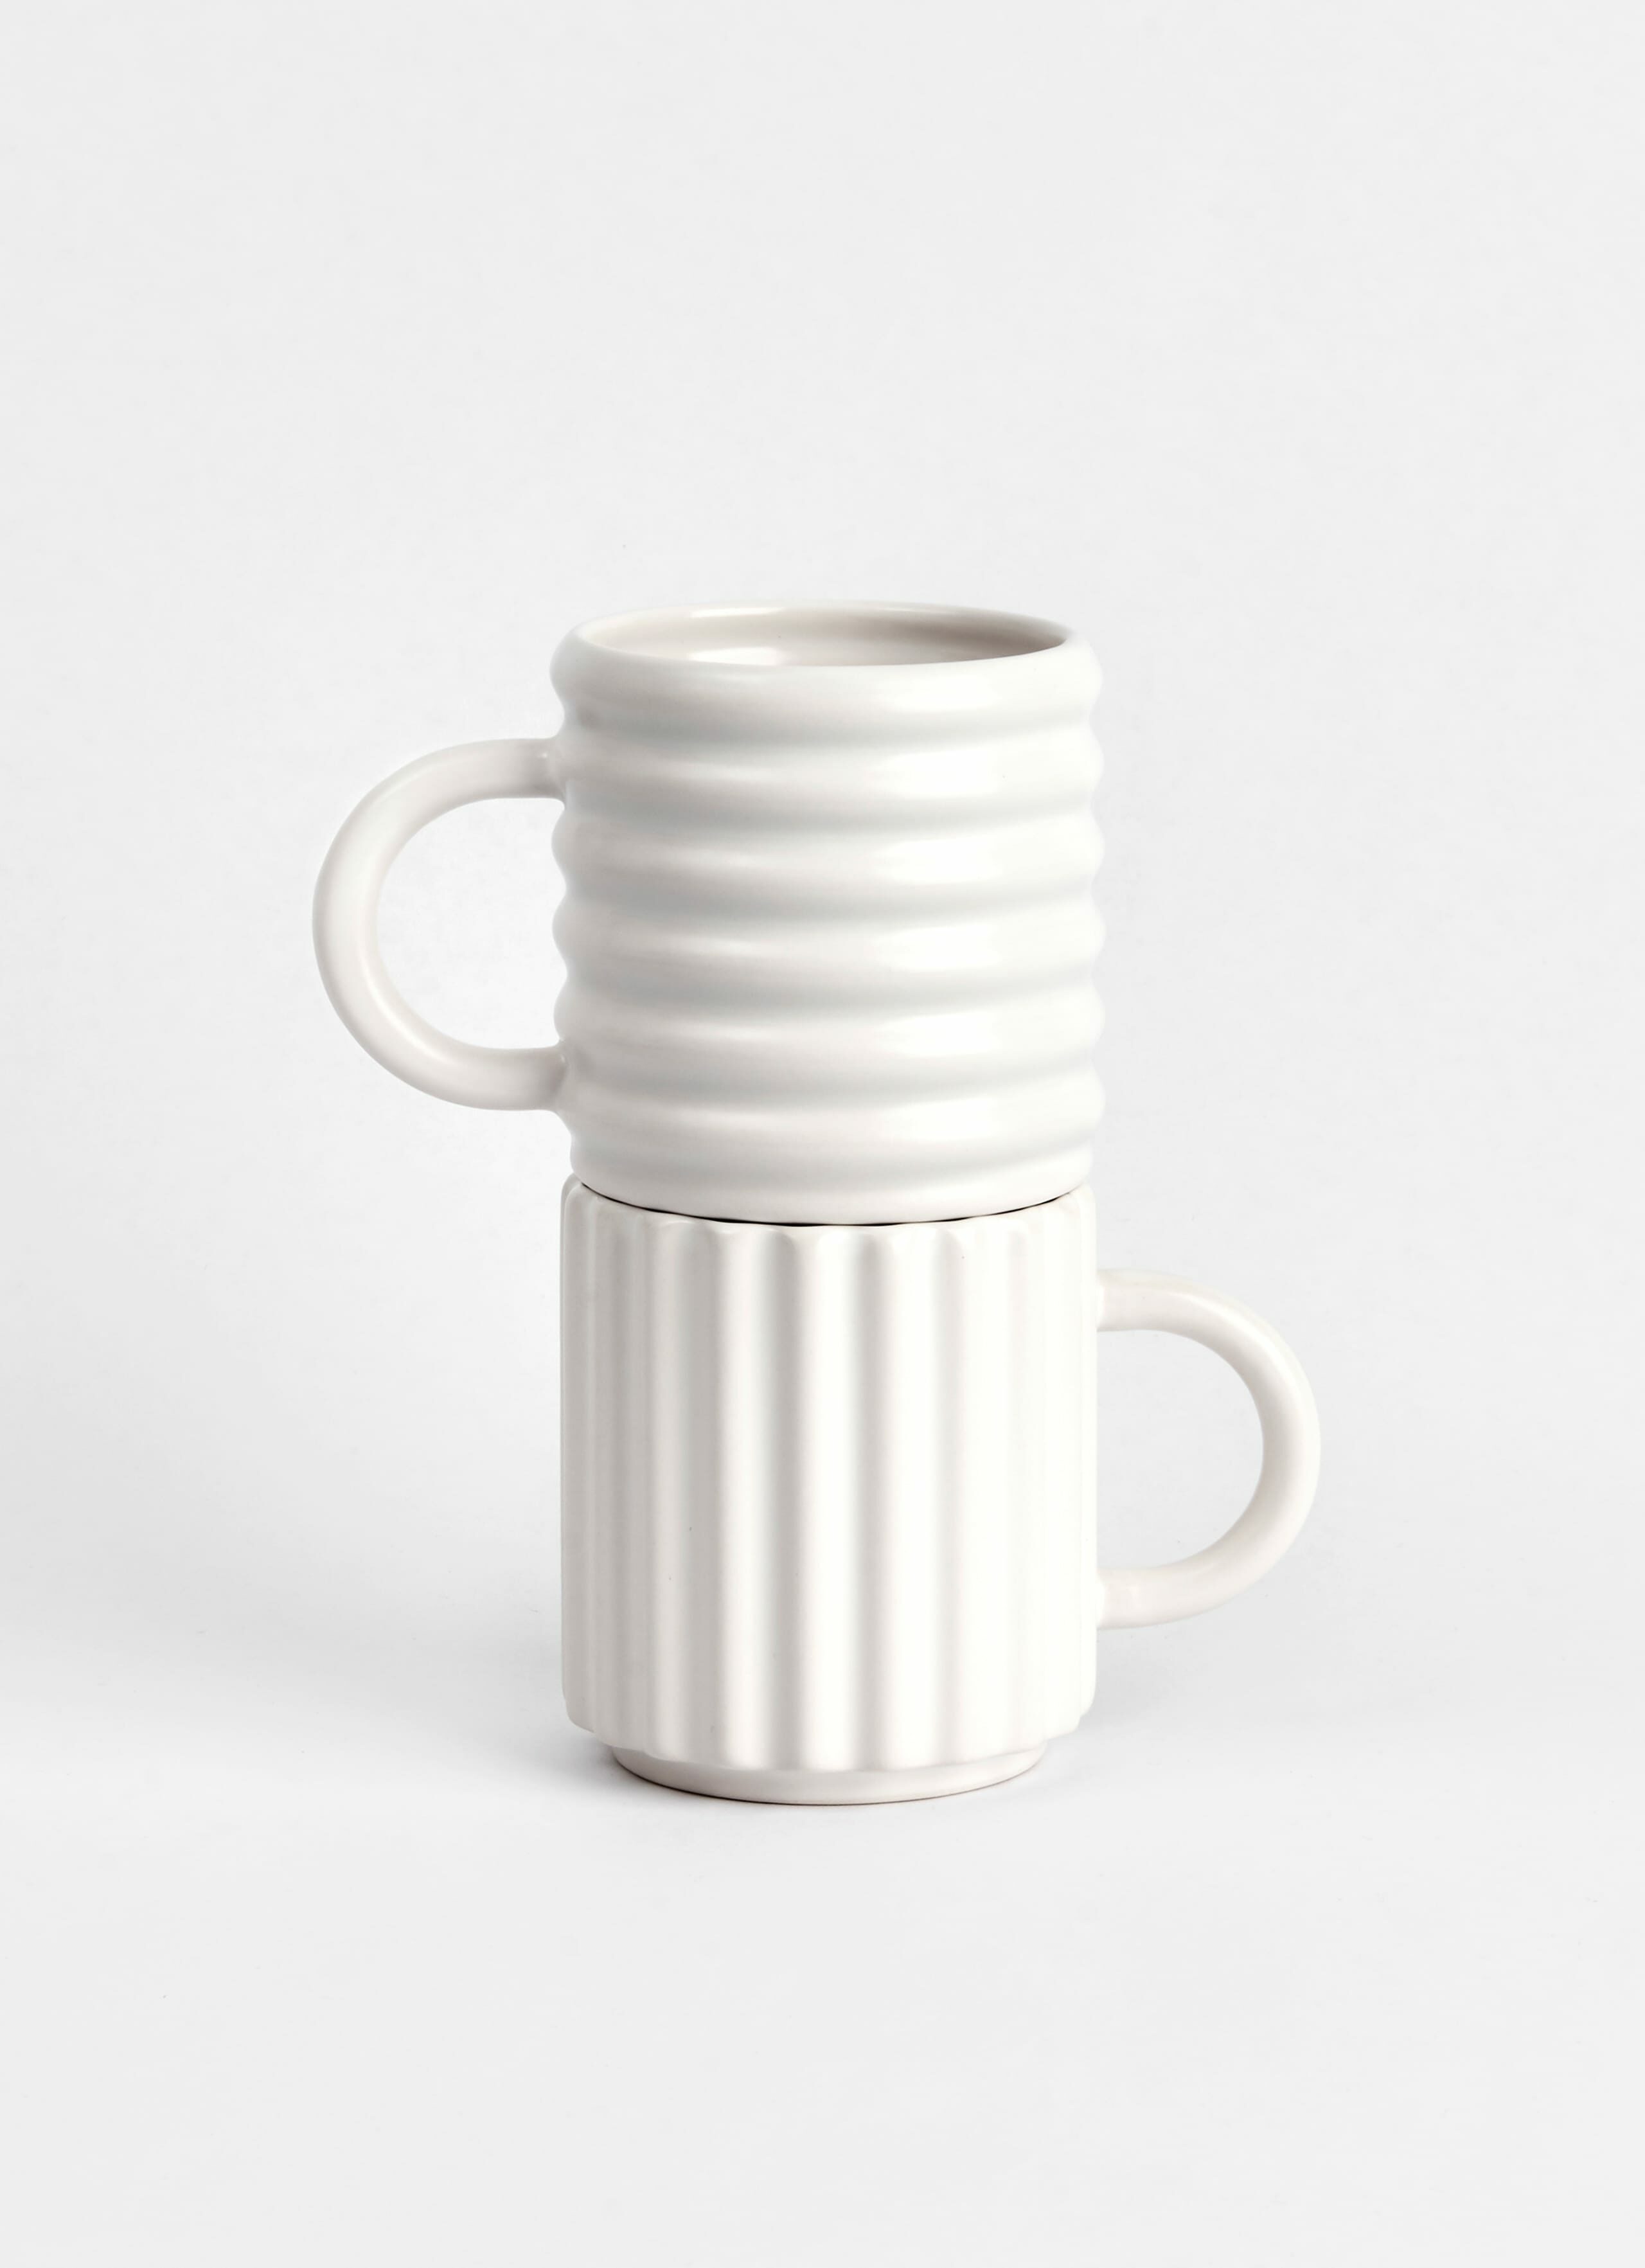 Ceramic Details about   Teespring Kringle Con 3 Mug Mug 